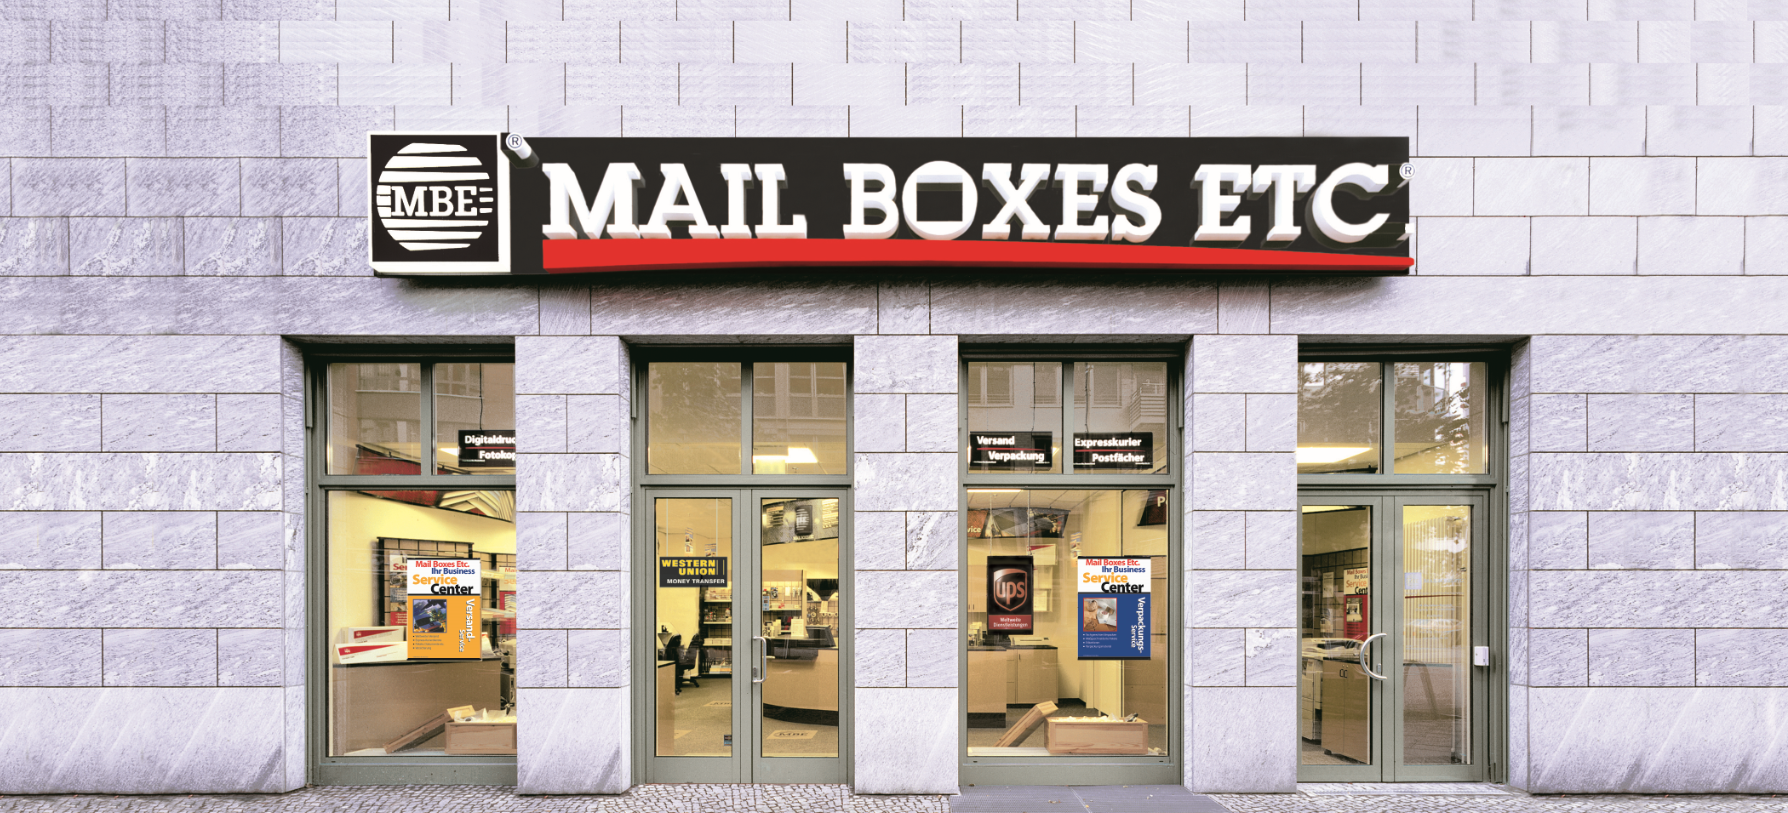 Mail Boxes Etc. - Center MBE 2523, Strobelallee 54 in Dortmund